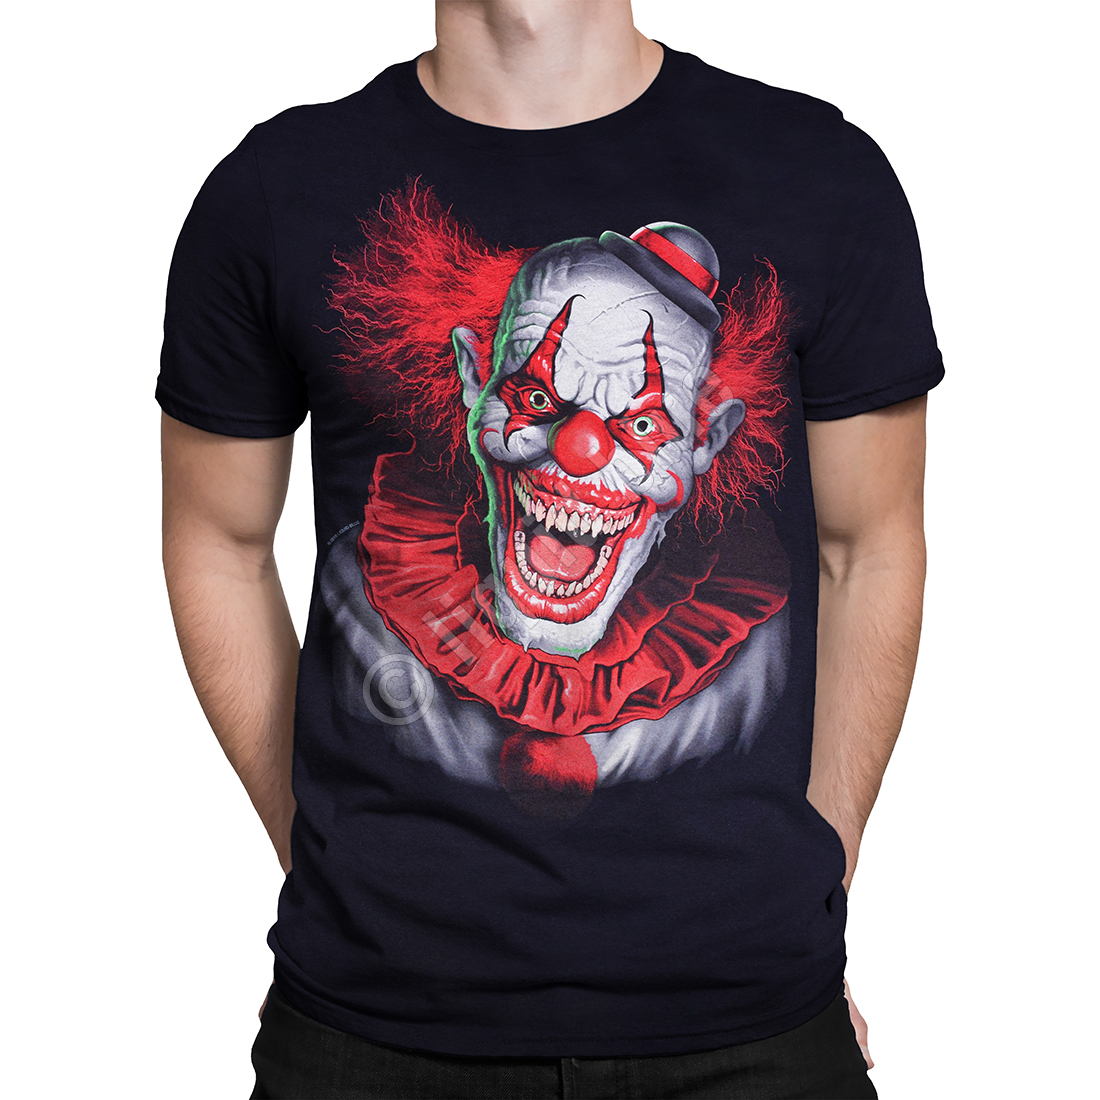 Scary Clown Dark Fantasy T-shirt